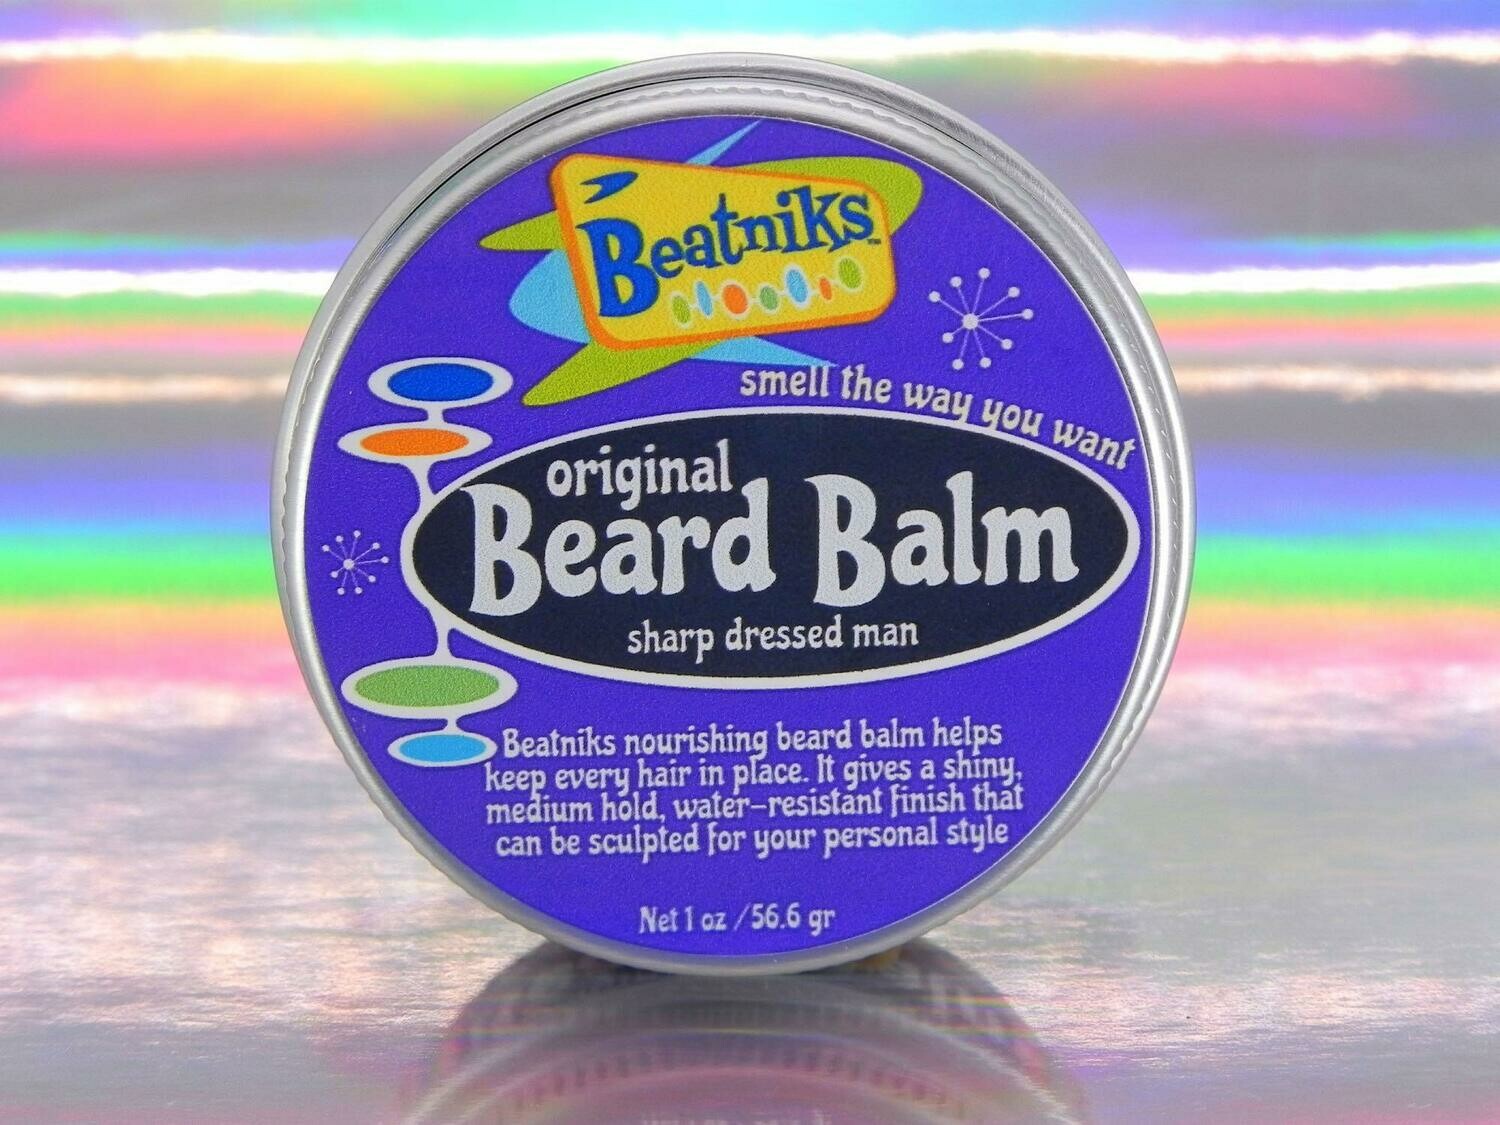 SHARP DRESSED MAN | Beard Balm Original